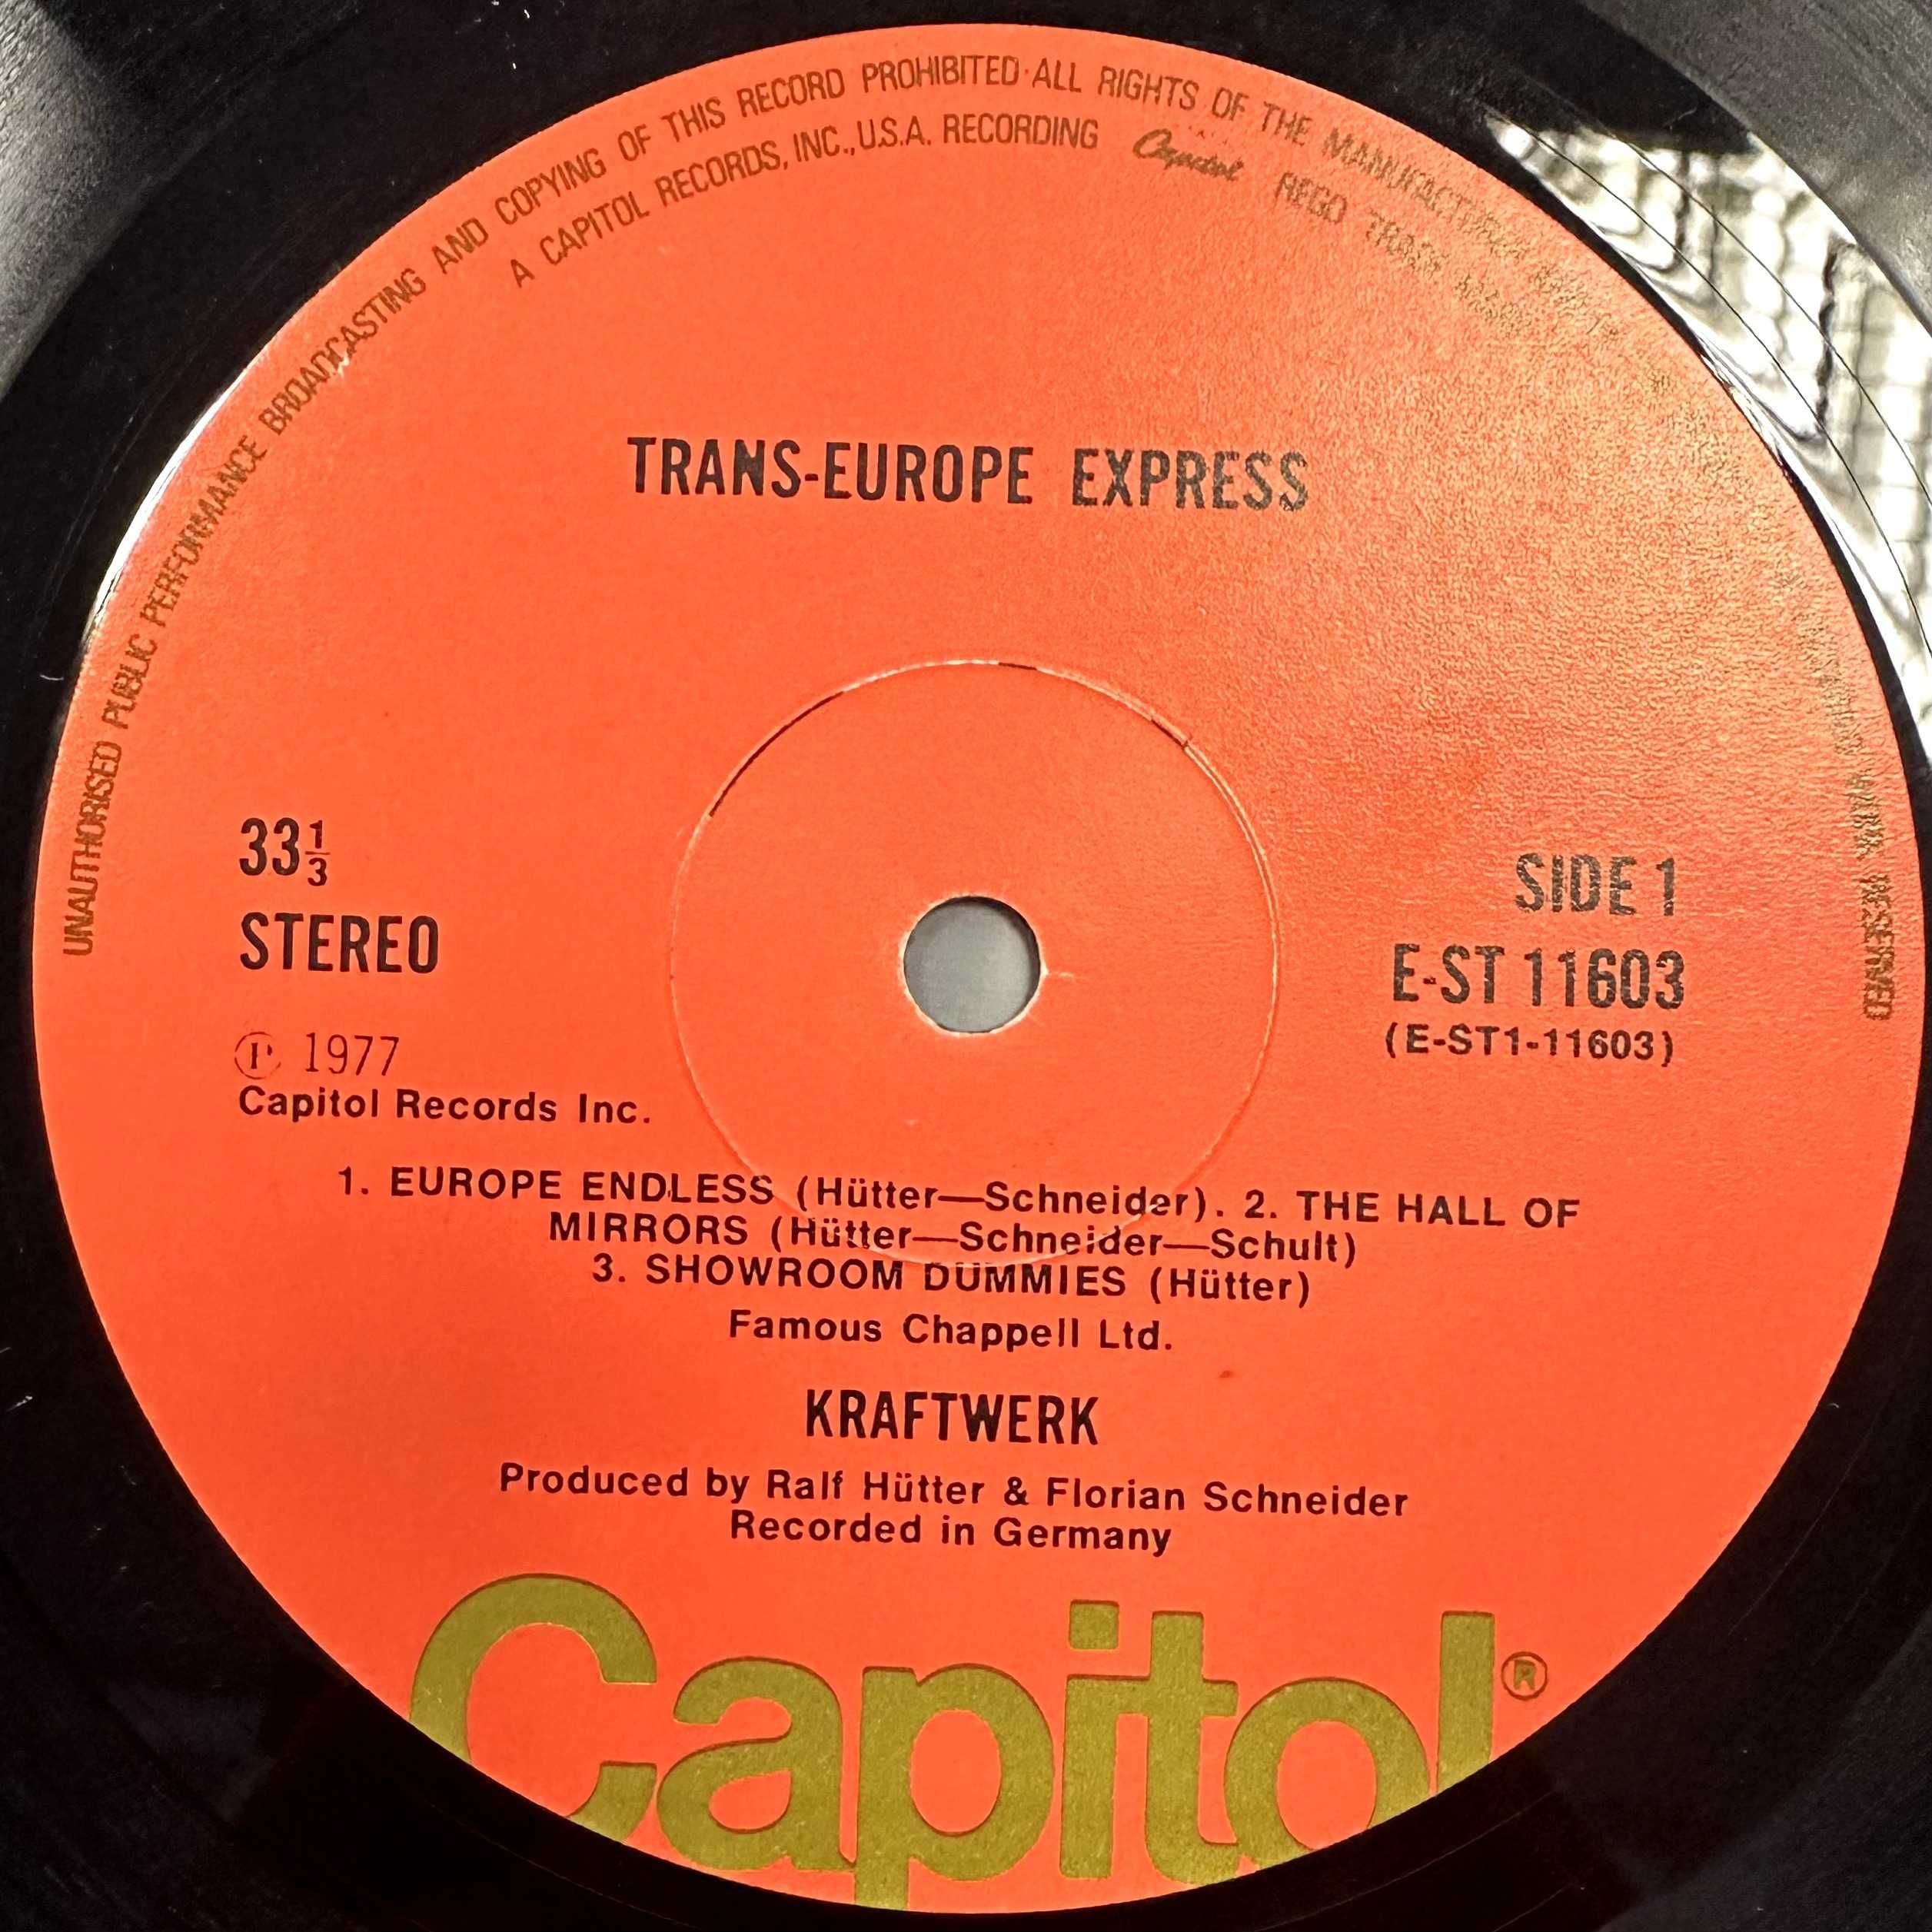 Kraftwerk - Trans-Europe Express (Vinyl, 1977, UK)